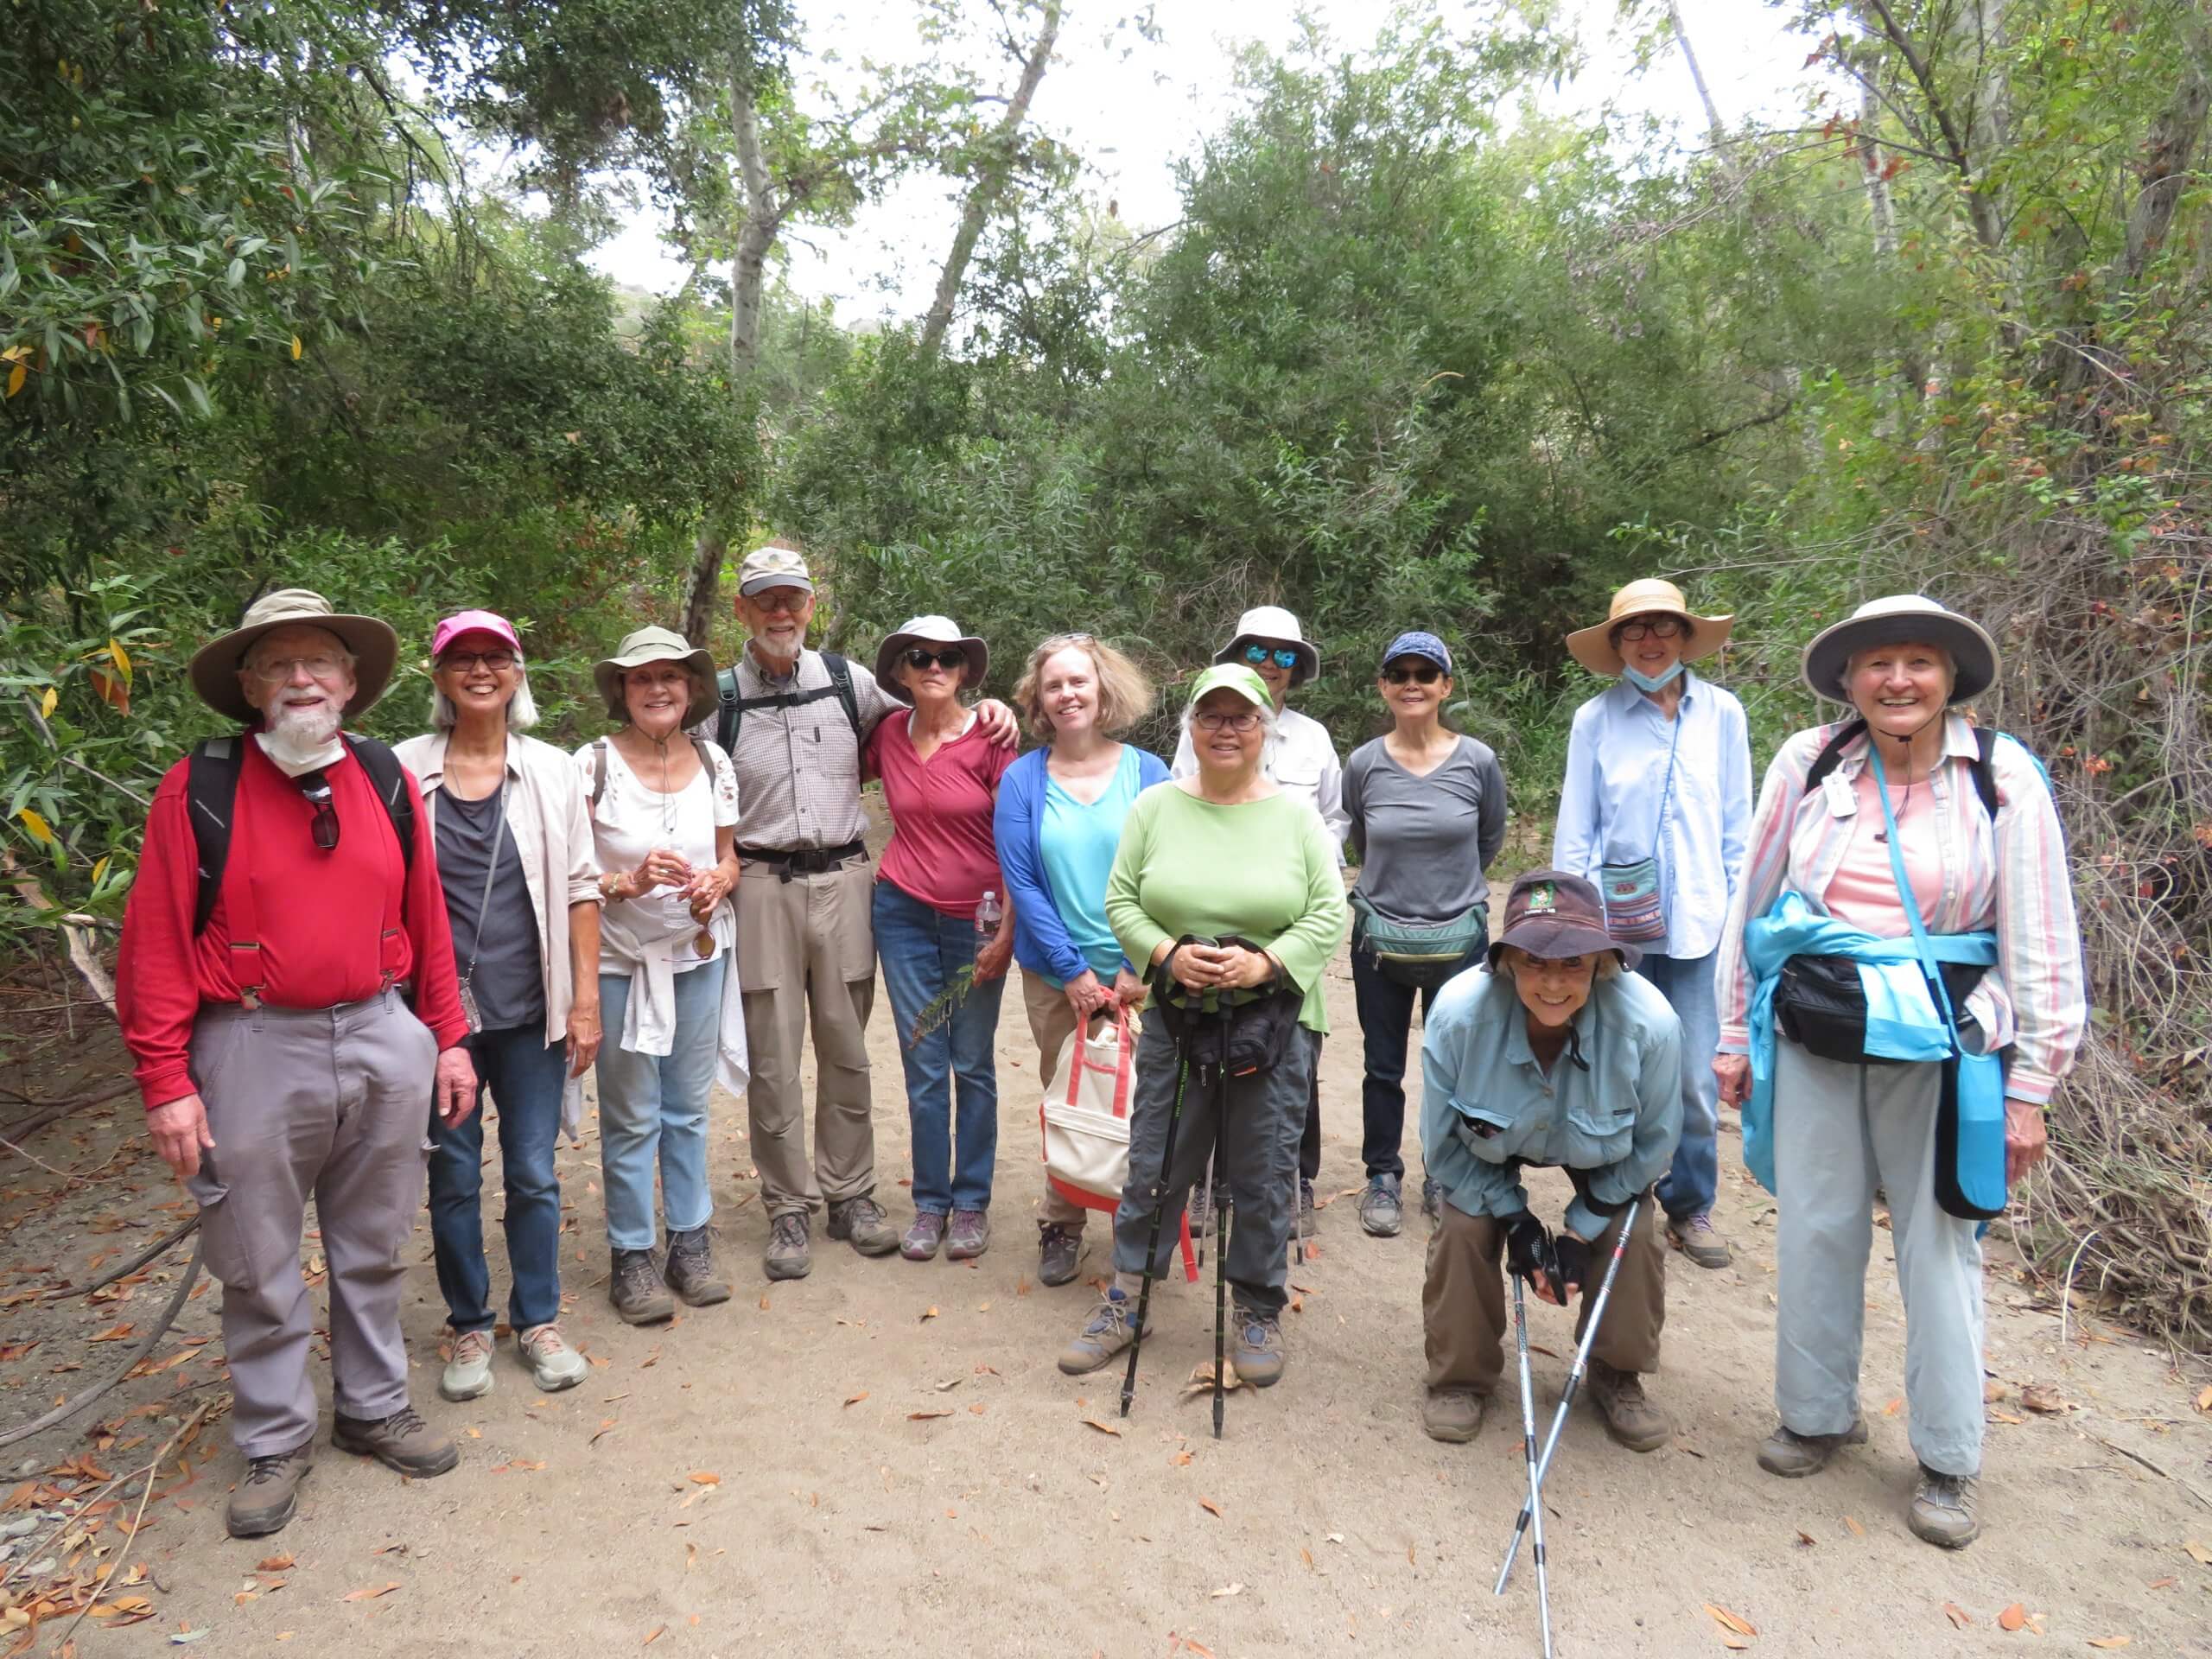 UUSM Hikers in July